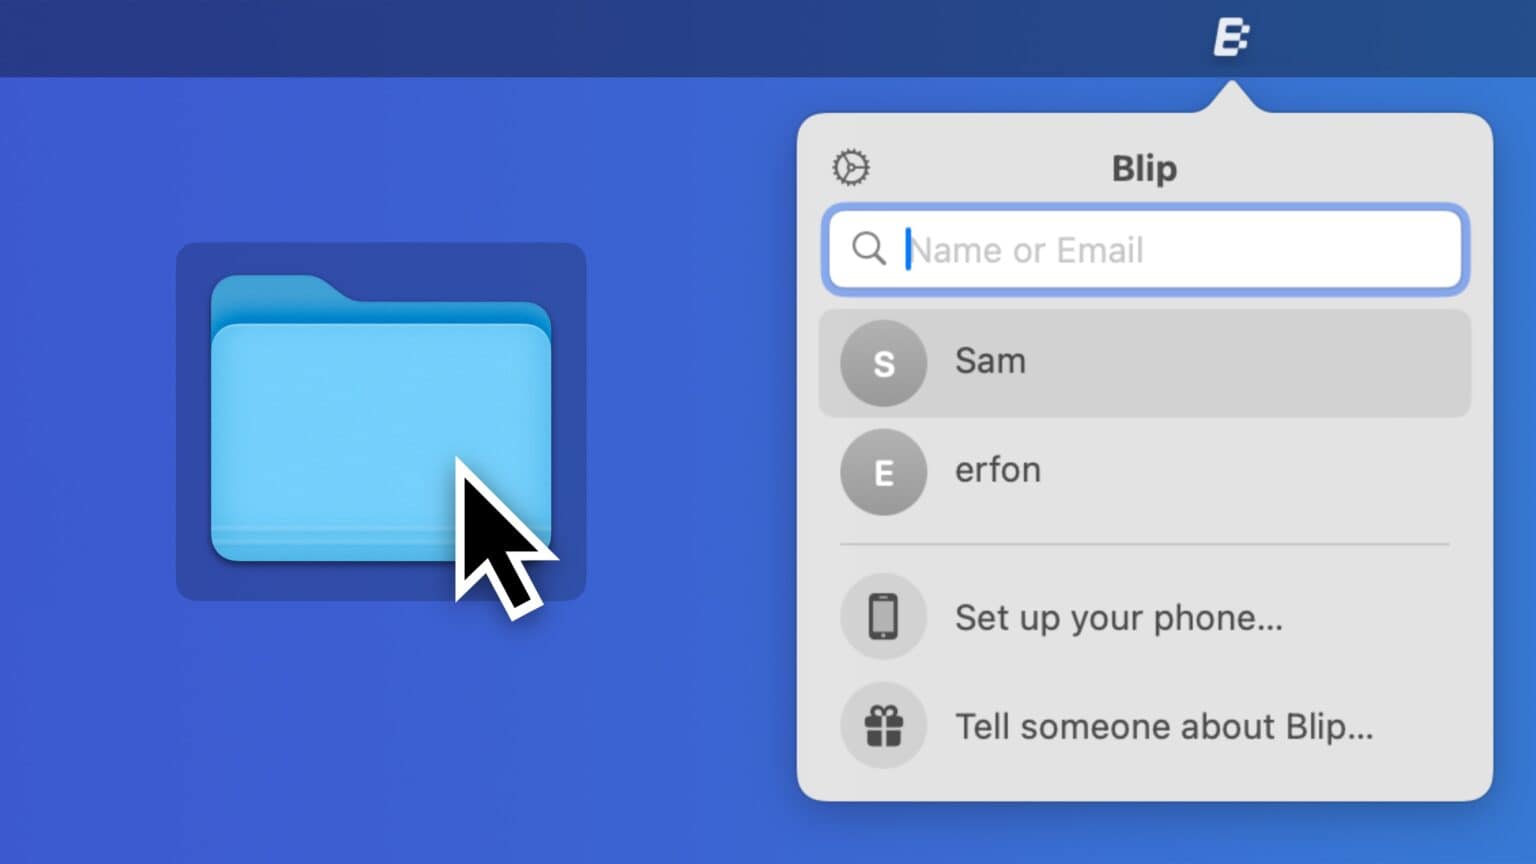 Blip file transfers